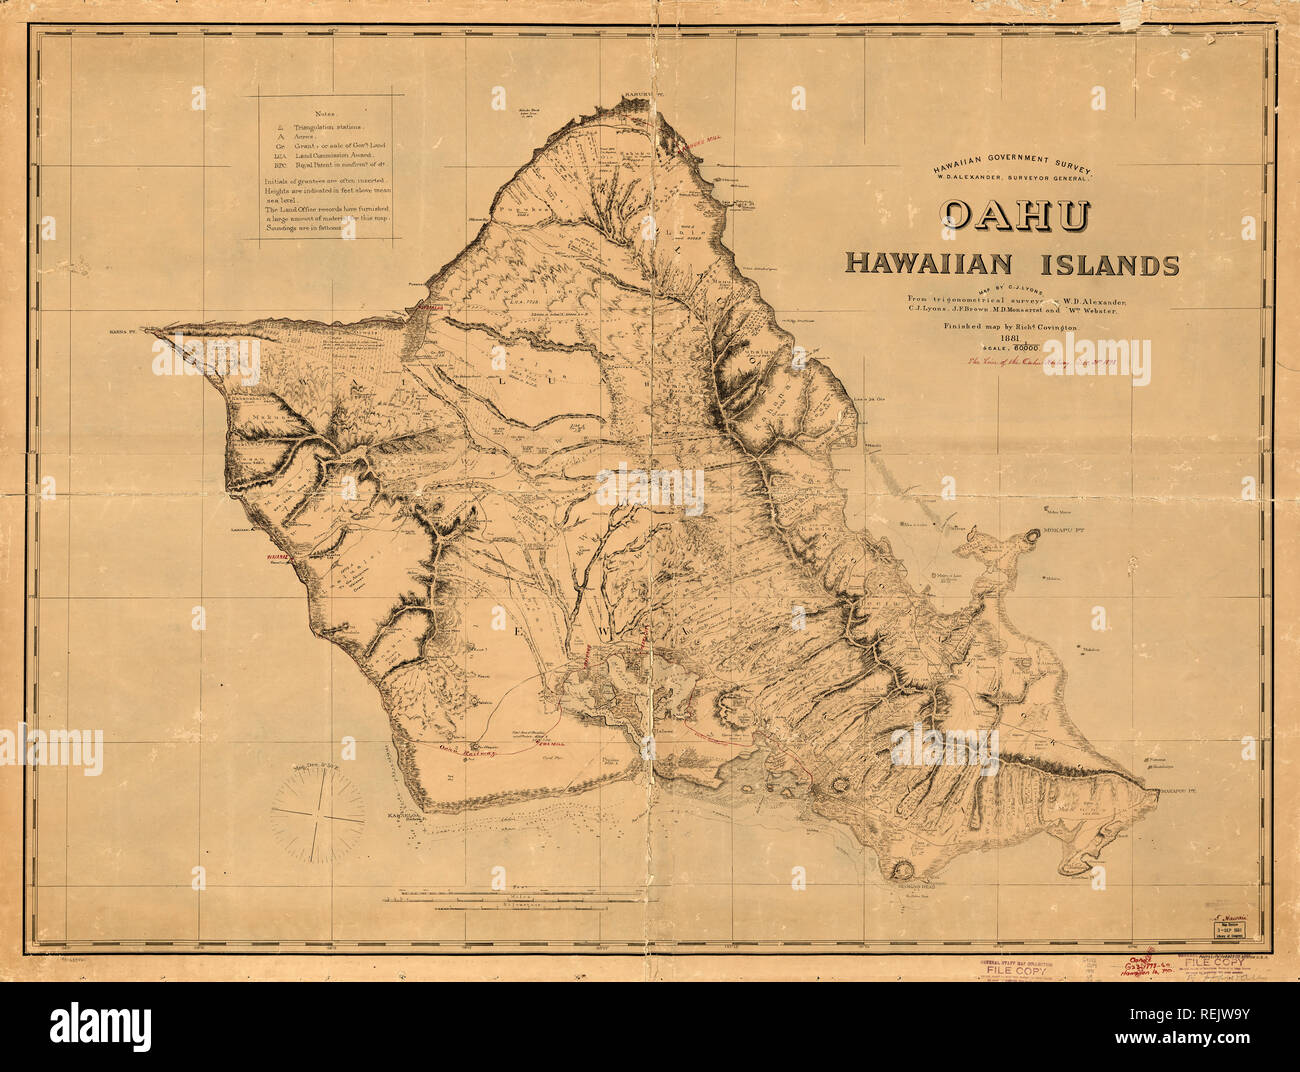 Oahu, Hawaiian Islands, Survey Map, by C.J. Lyons, from Trigonometrical Surveys by W.D. Alexander, C.J. Lyons, J.F. Brown, M.D. Monsarrat and Wm. Webster, Finished Map by Richard Covington, 1881 Stock Photo